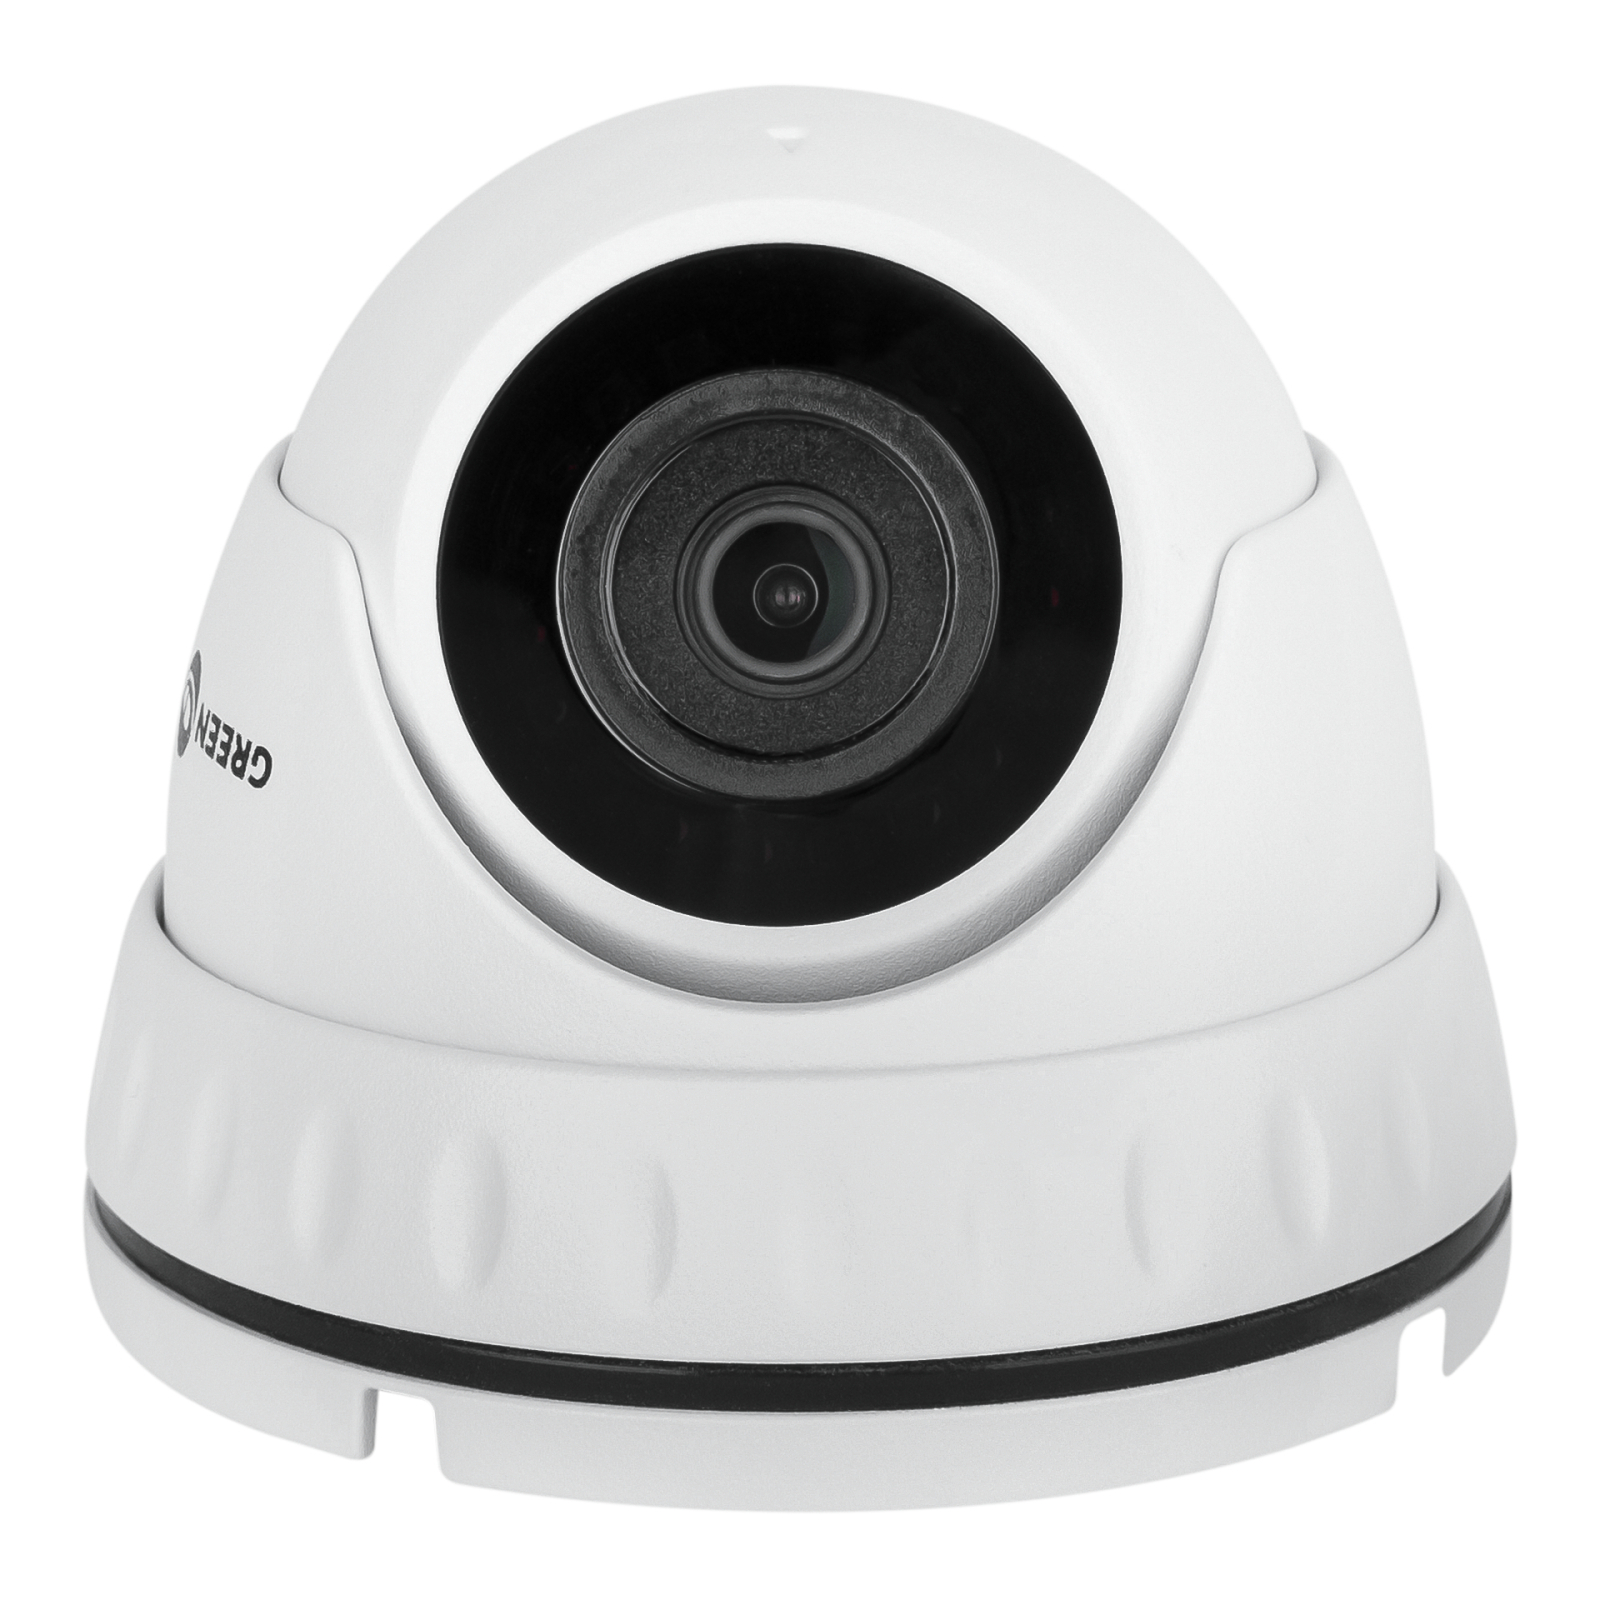 Камера видеонаблюдения Greenvision GV-146-GHD-H-DOG20-30 (16892) изображение 2